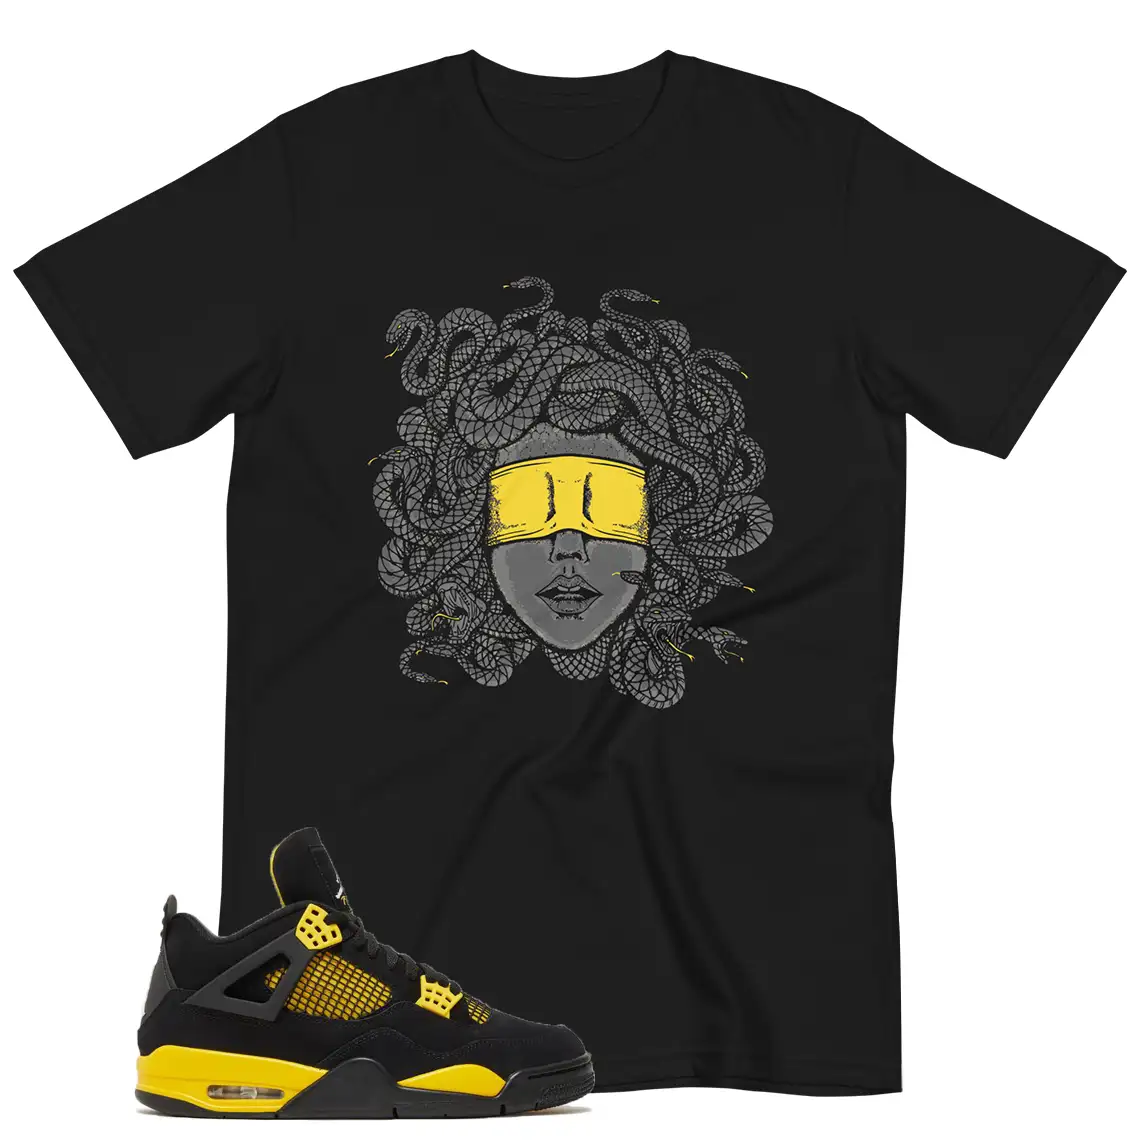 Jordan 4 Thunder Outfit Shirt - Medusa Head Graphic